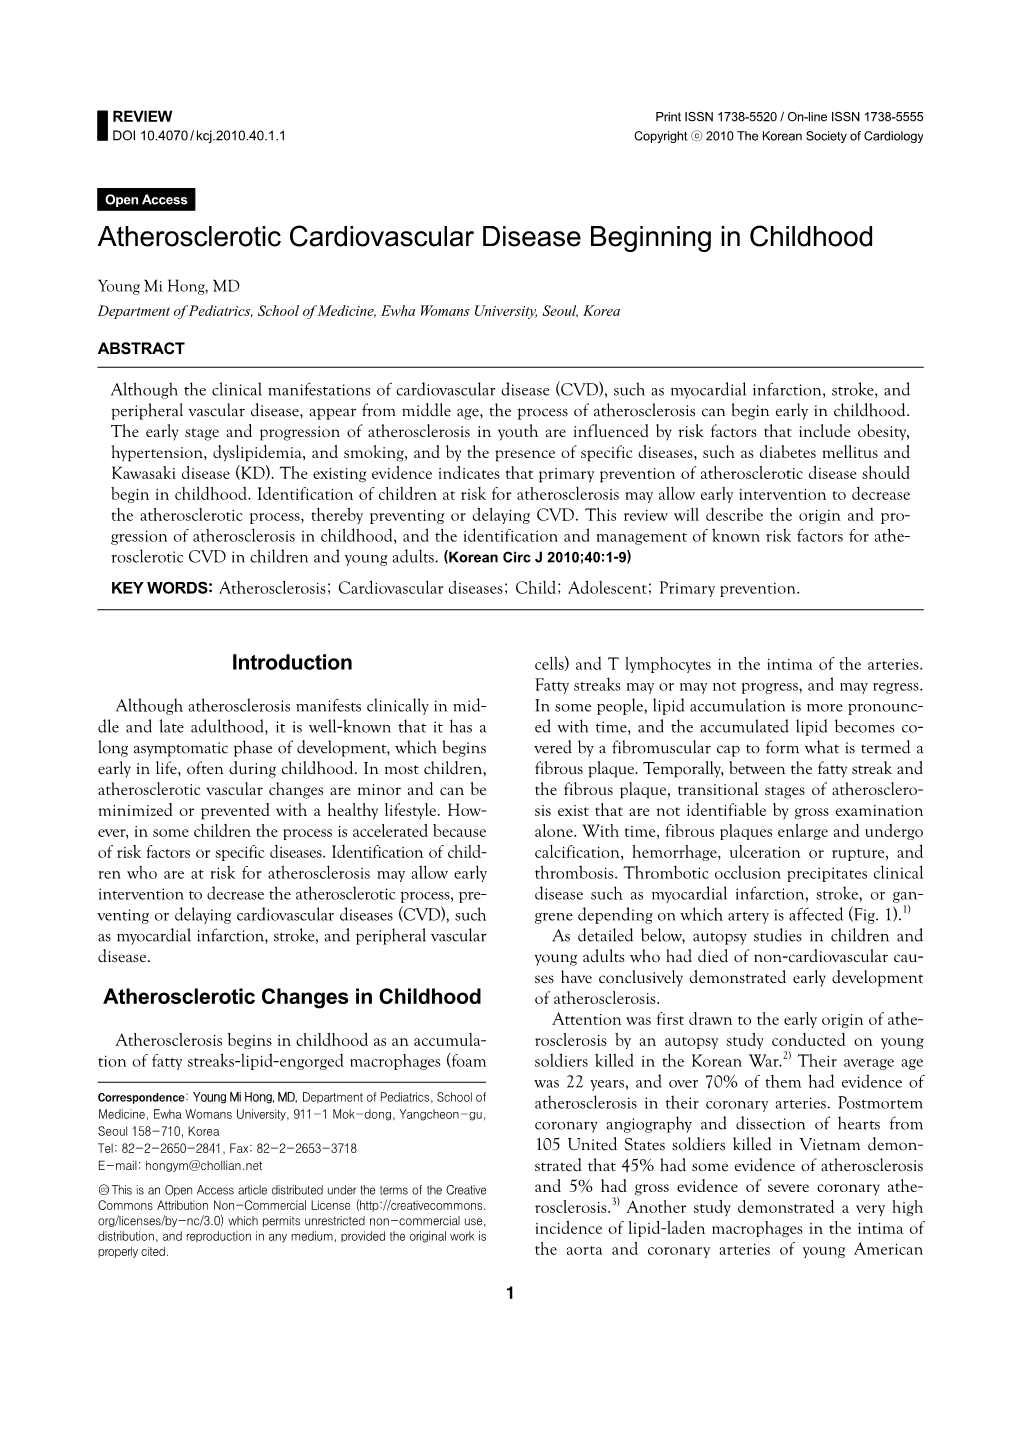 Atherosclerotic Cardiovascular Disease Beginning in Childhood